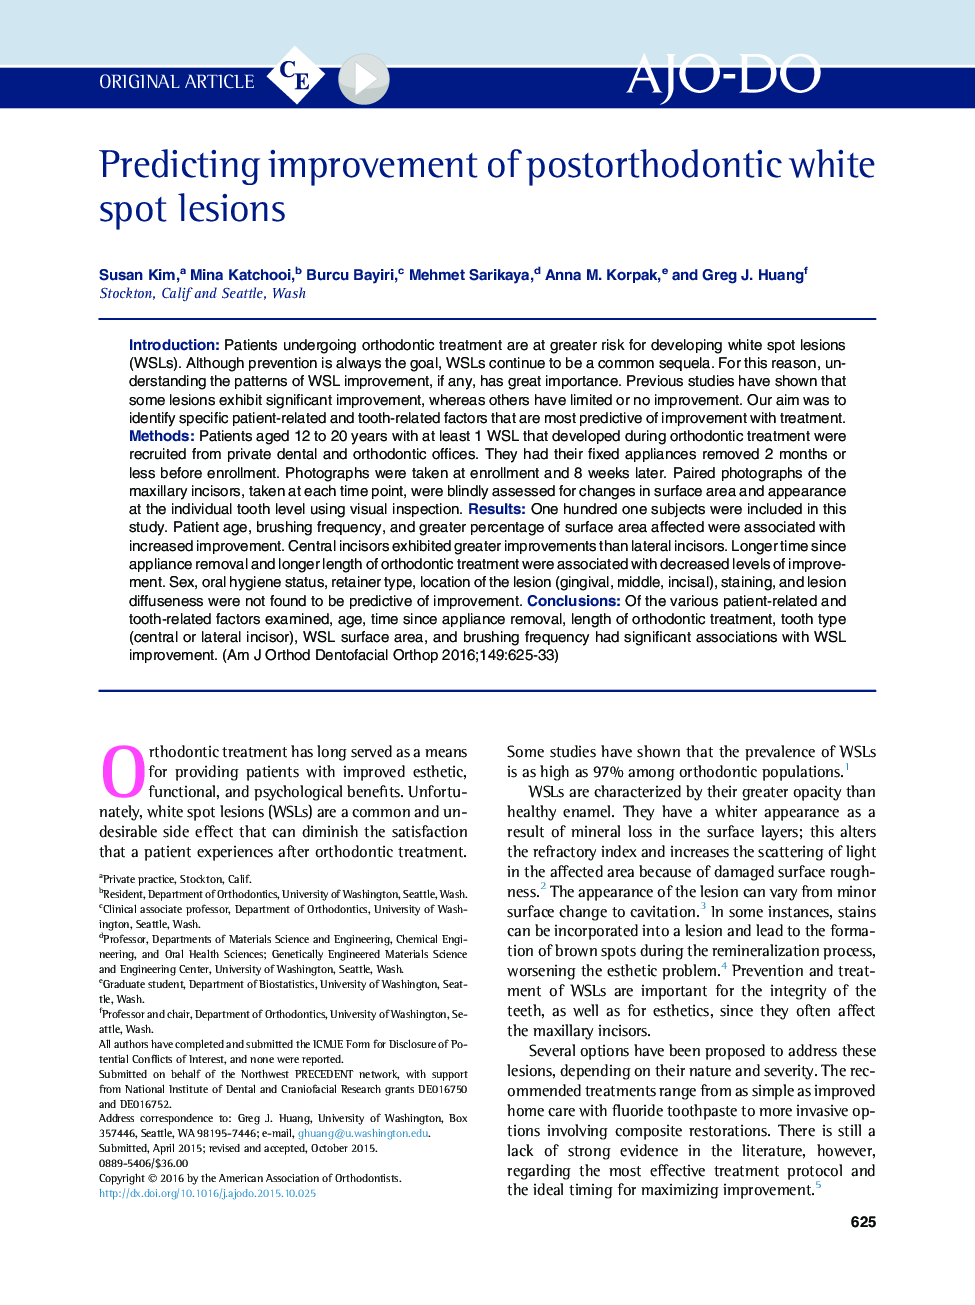 Predicting improvement of postorthodontic white spot lesions 